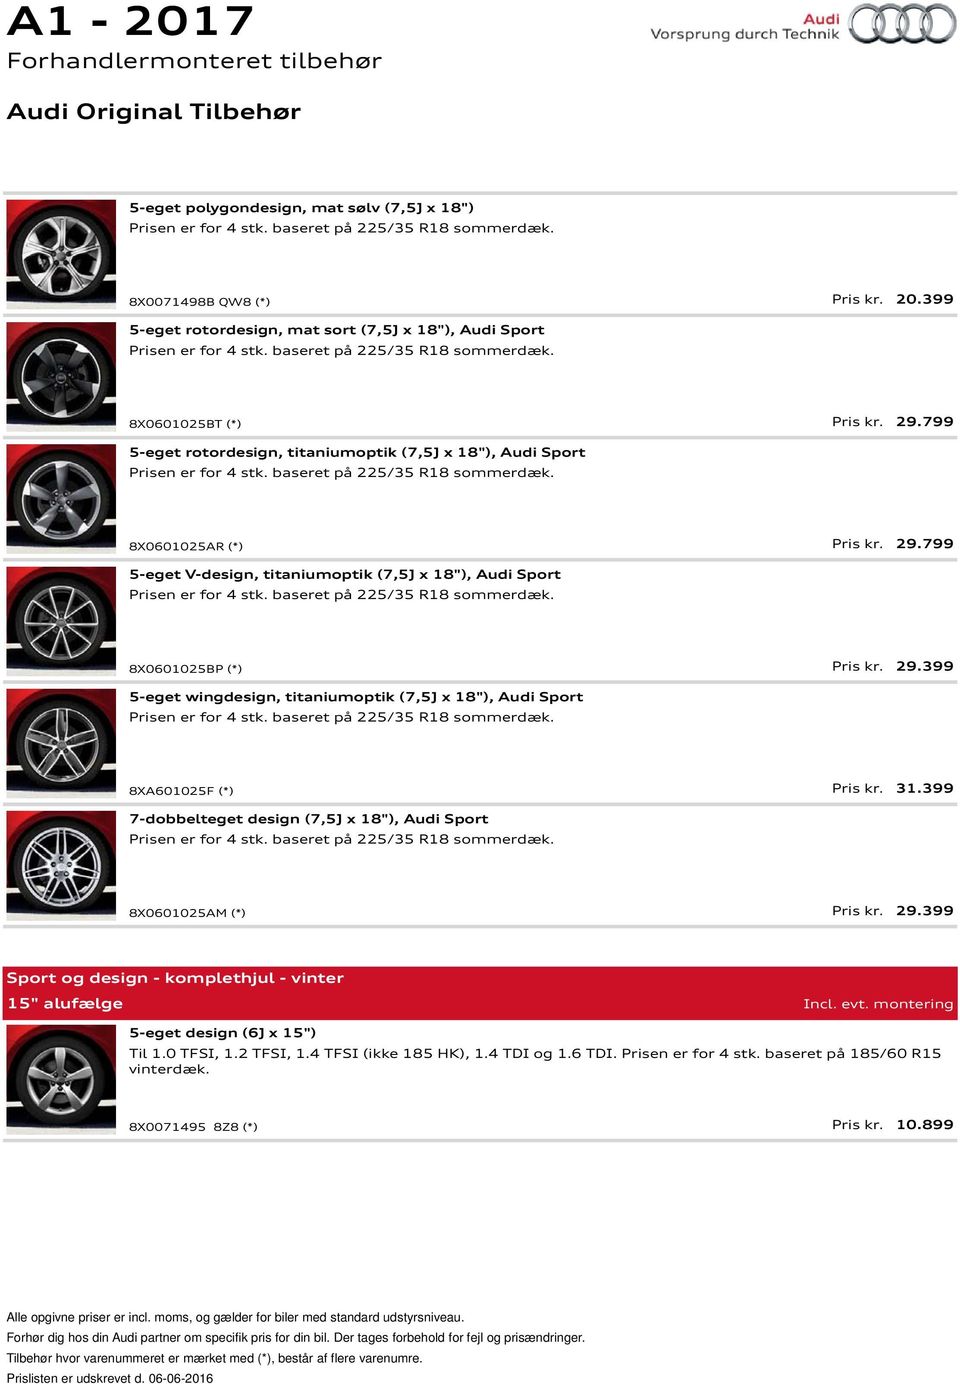 799 5-eget rotordesign, titaniumoptik (7,5J x 18"), Audi Sport Prisen er for 4 stk. baseret på 225/35 R18 sommerdæk. 8X0601025AR (*) Pris kr. 29.